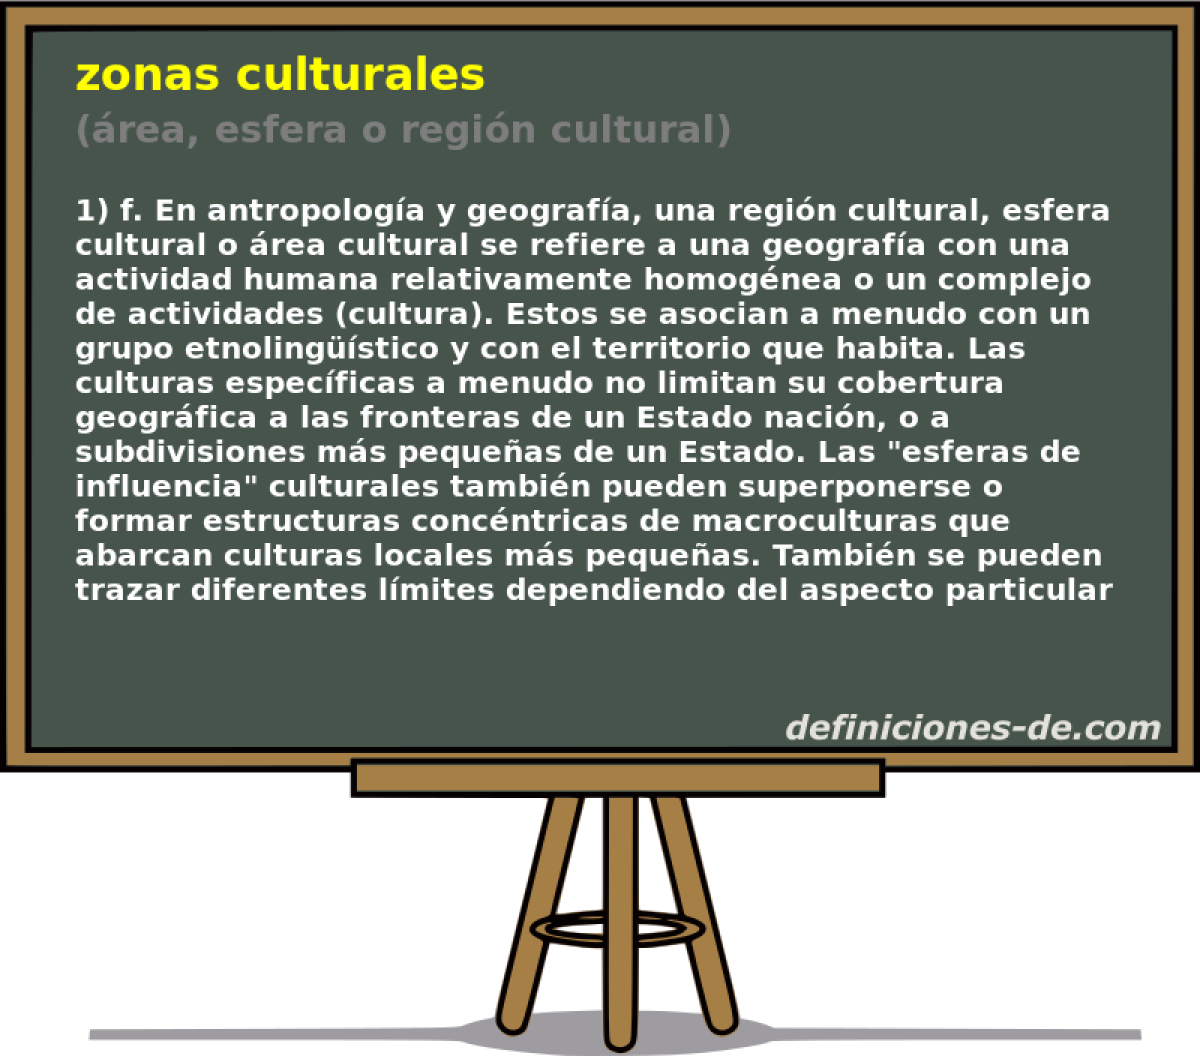 zonas culturales (rea, esfera o regin cultural)